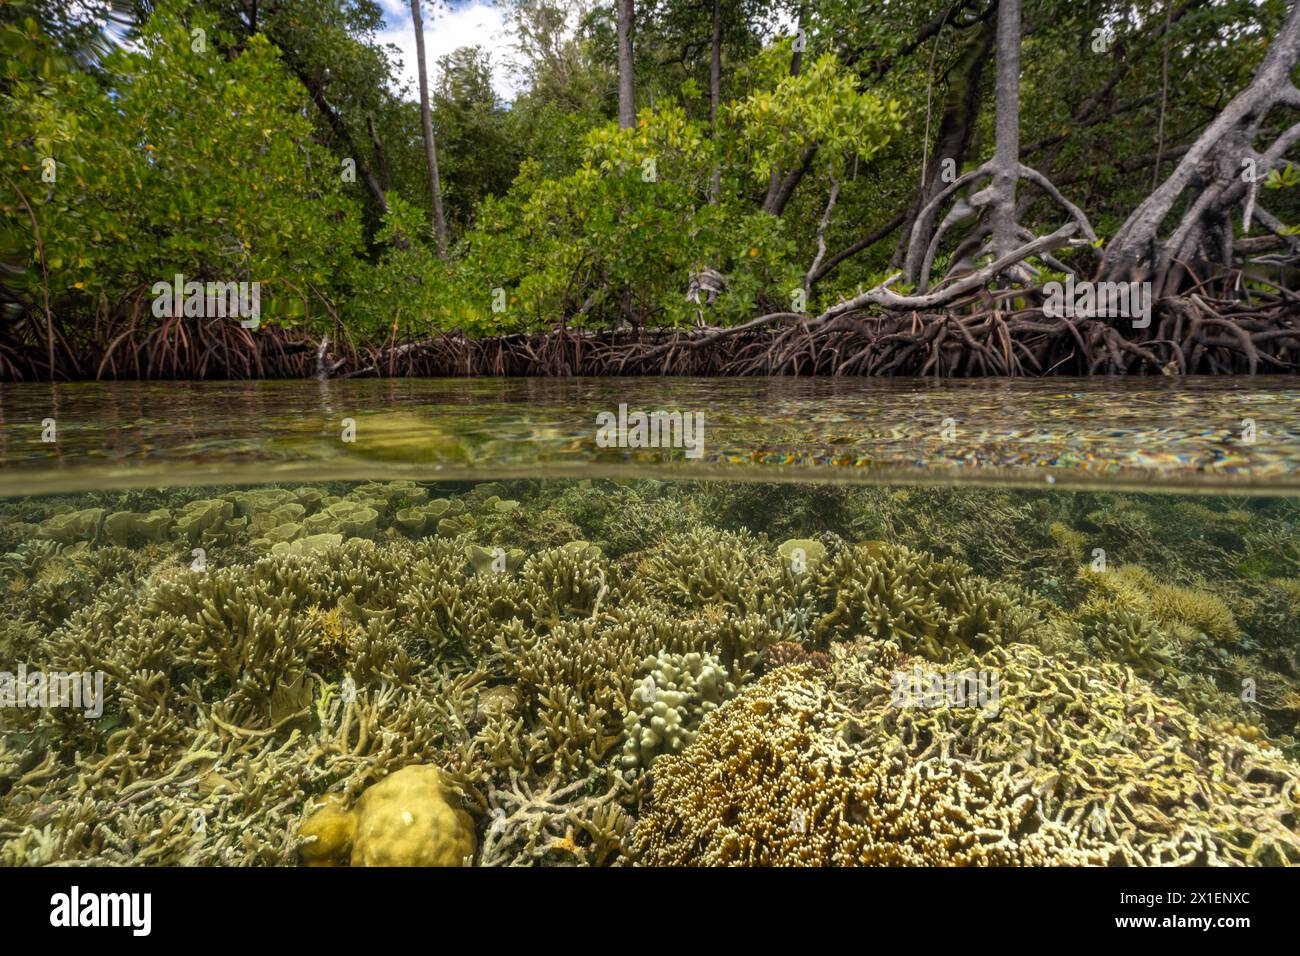 Foresta di mangrovie e barriere coralline in Split shot, Gam Island Raja Ampat Indnonesia. Foto Stock